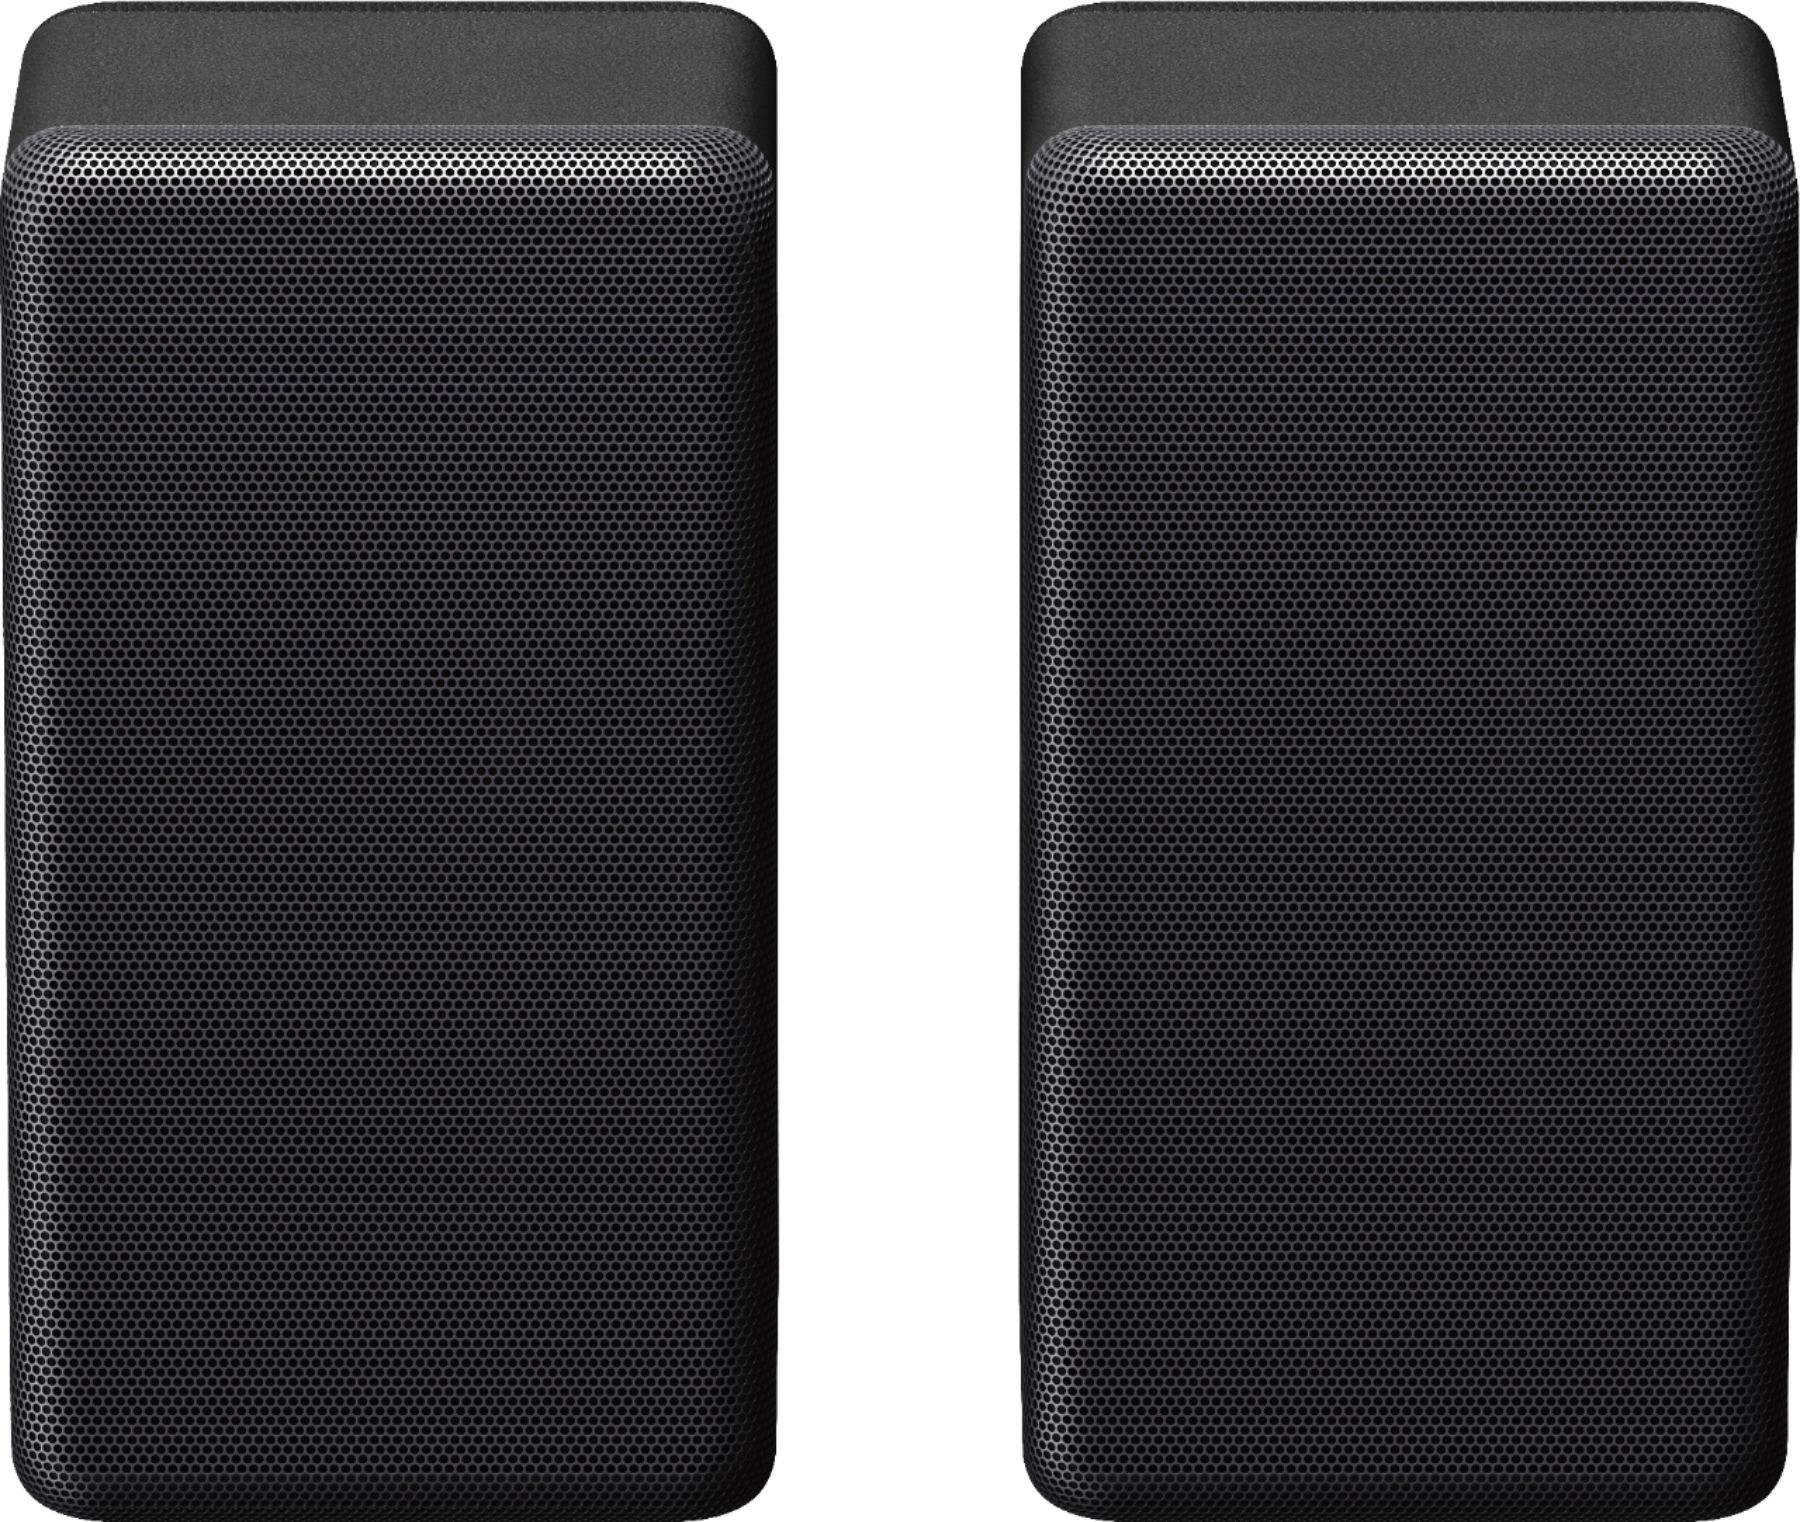 Sony SA-RS3S Wireless Rear SARS3S Speaker Buy - Black Best